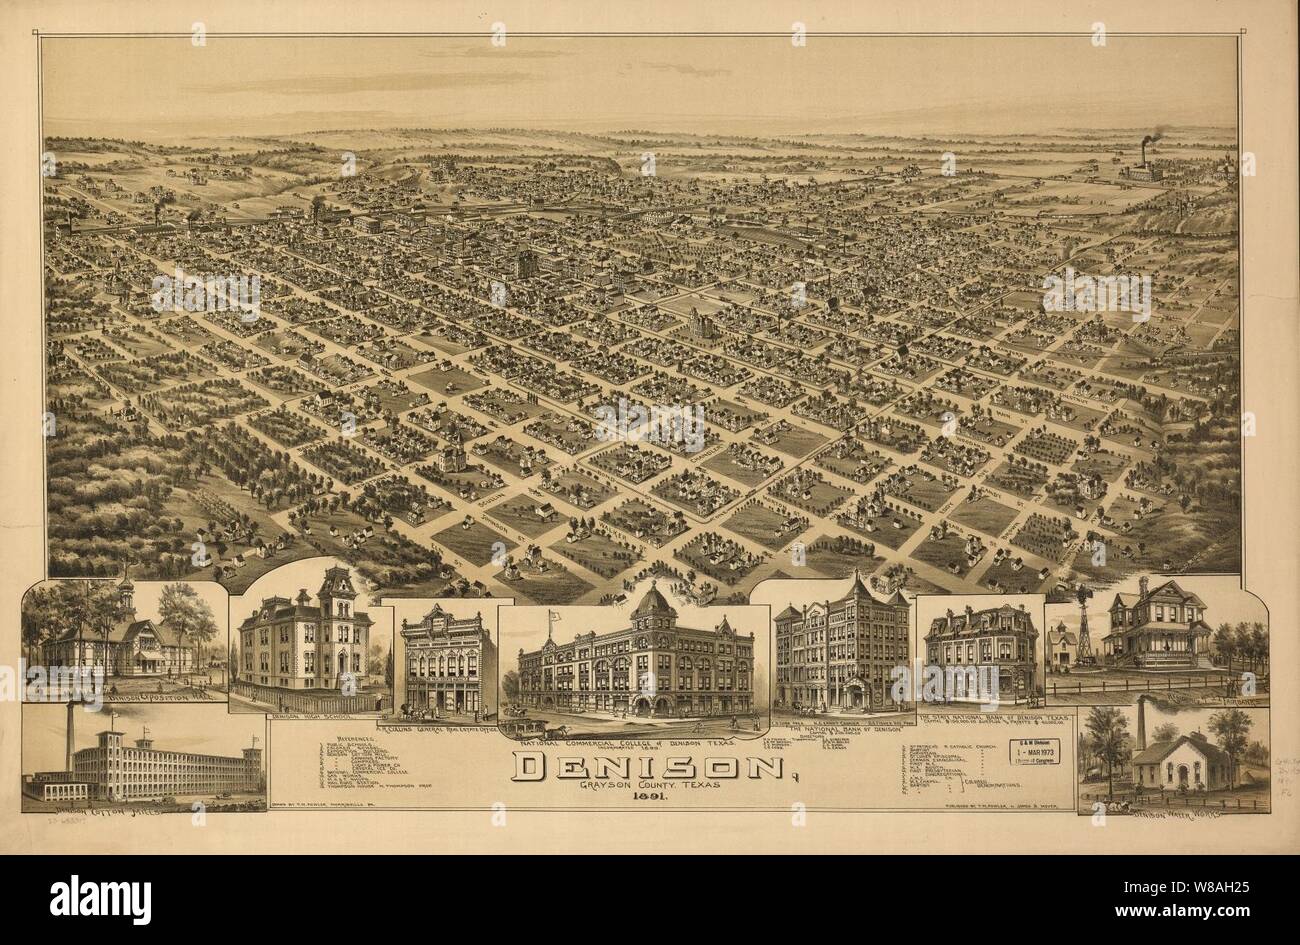 Denison, Grayson County, Texas 1891. Stock Photo